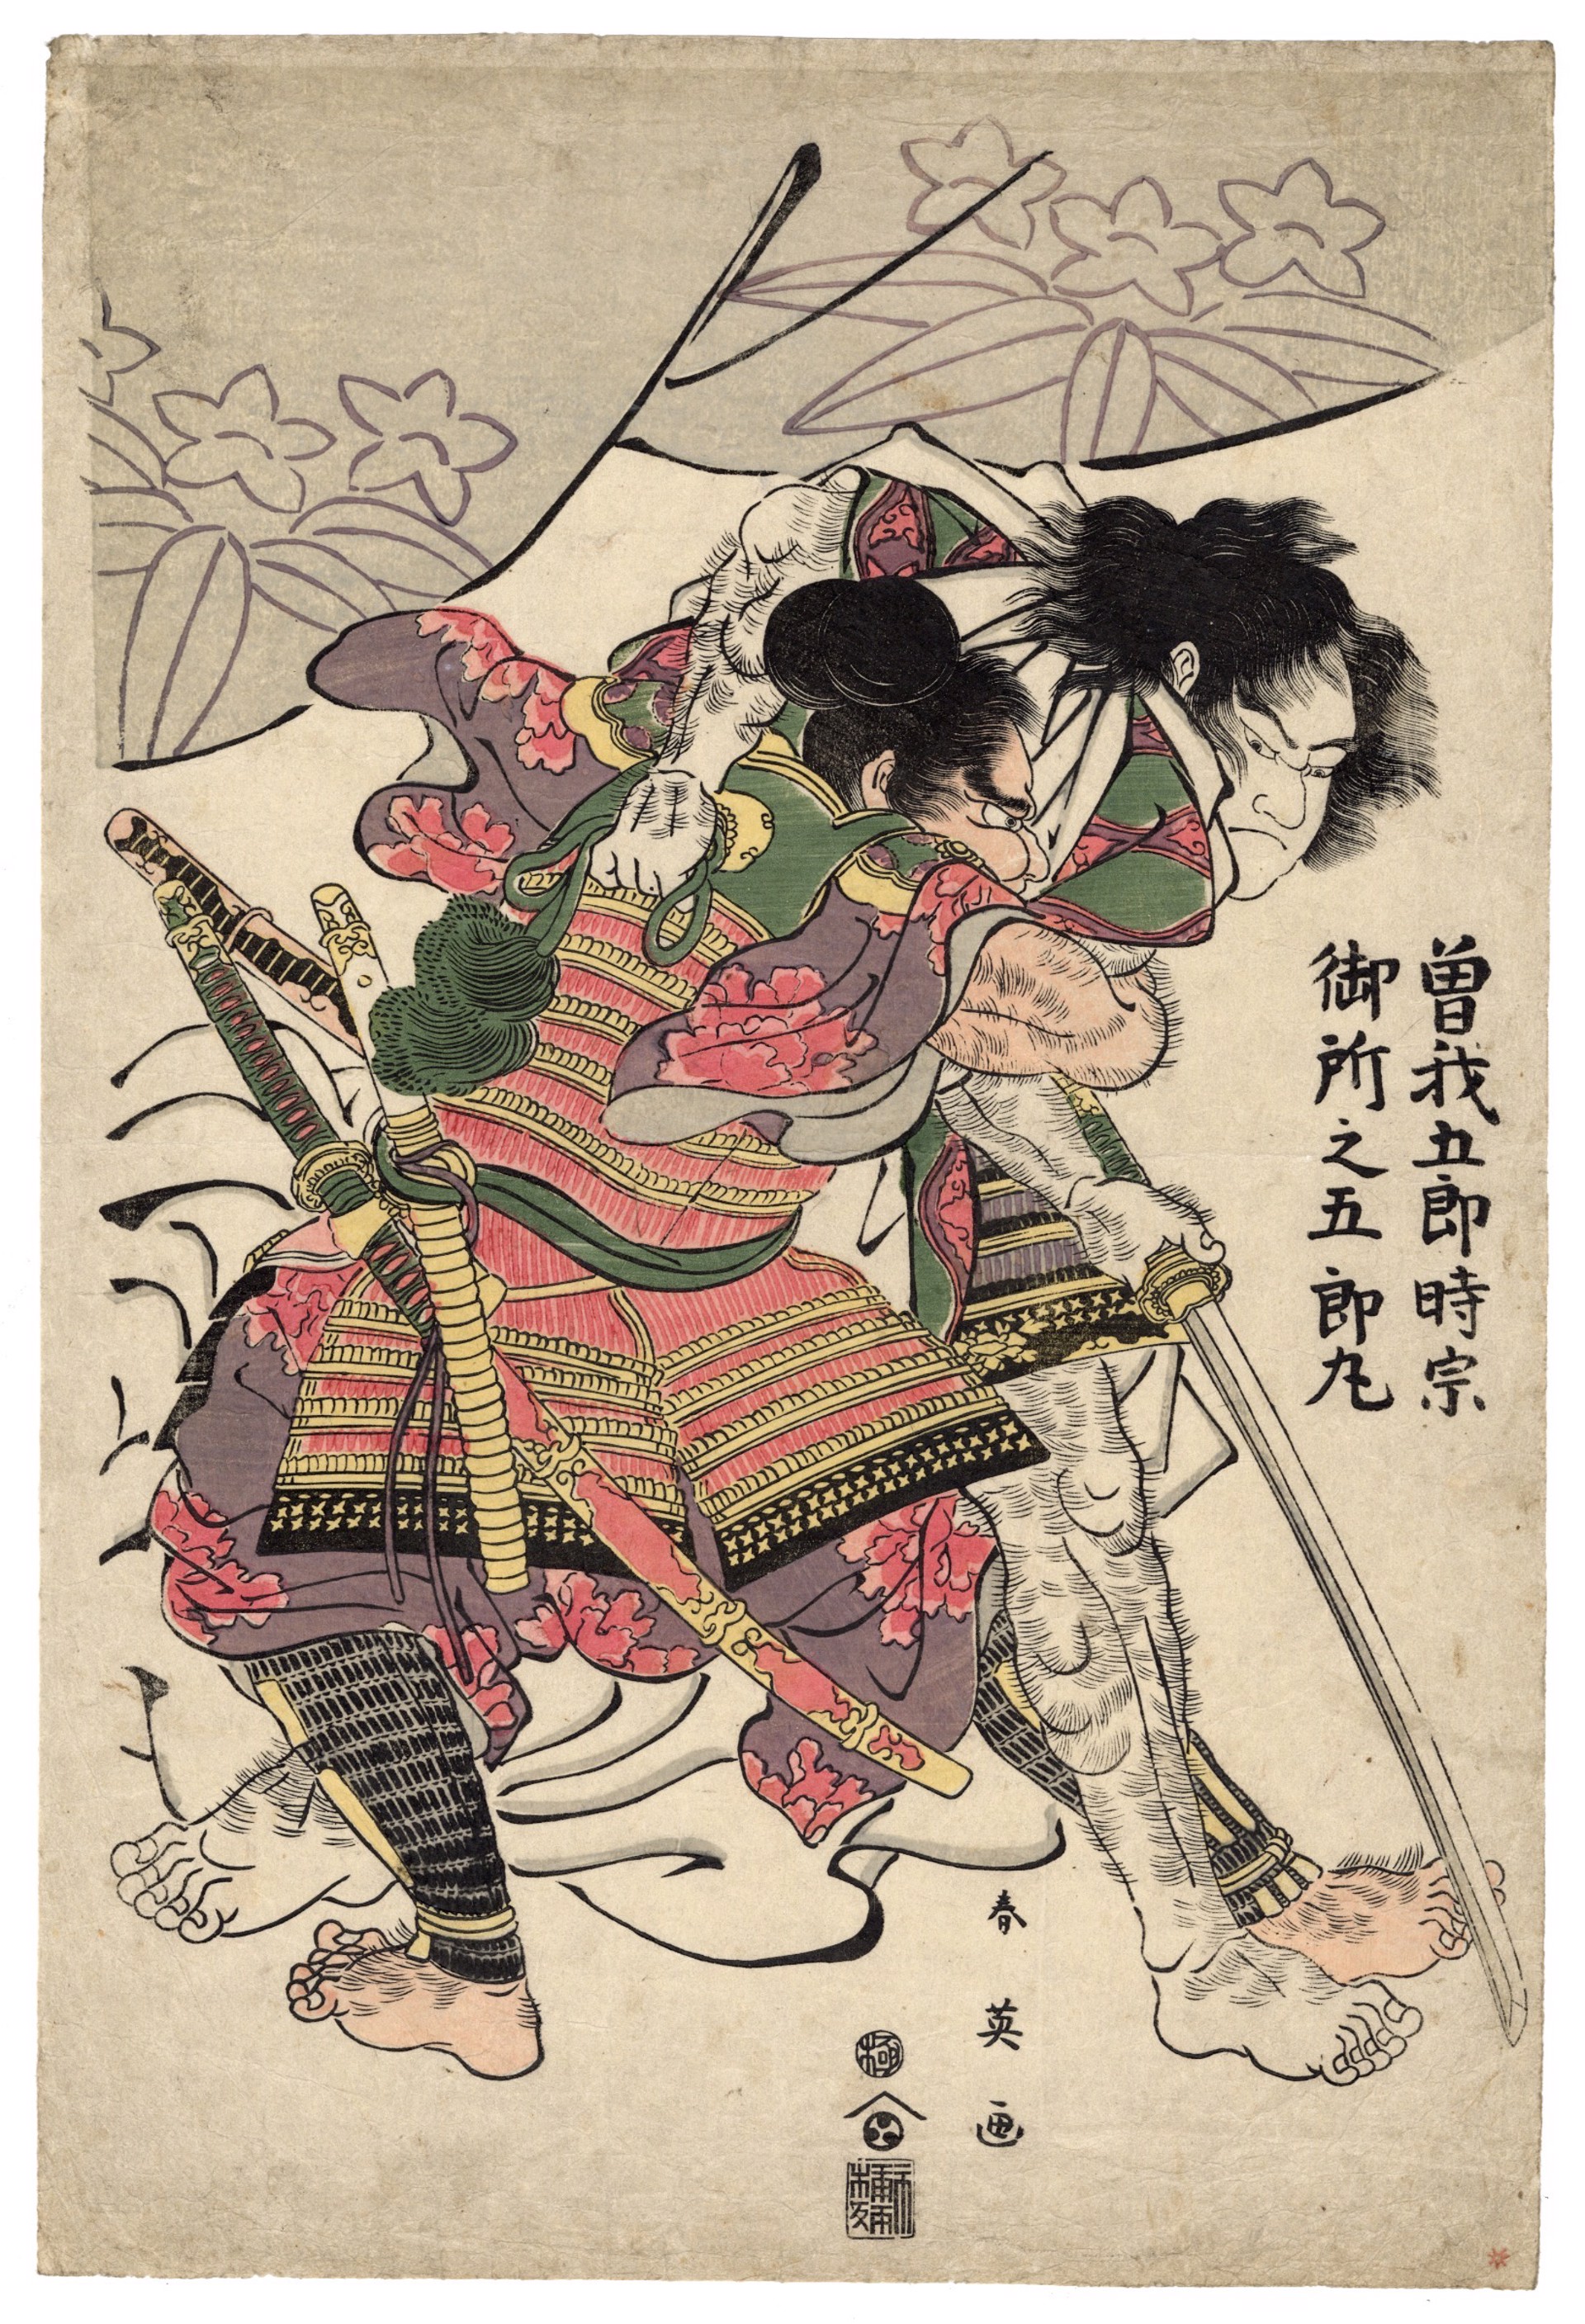 Gosho no Goromaru Stopping Soga no Goro(Tokimune) from Killing the Shogun by Shun'ei